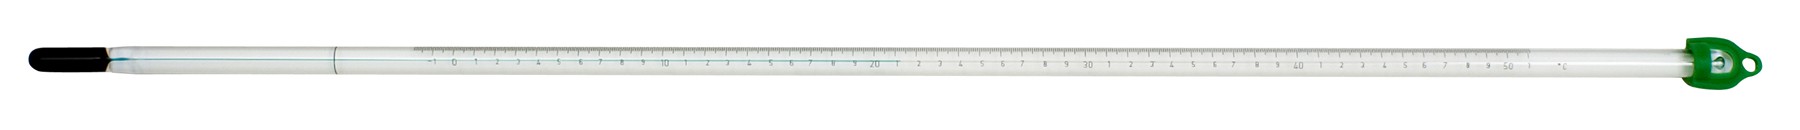 H-B DURAC Plus Precision Liquid-In-Glass Thermometer; 30 to 214F, 76mm Immersion, Organic Liquid Fill